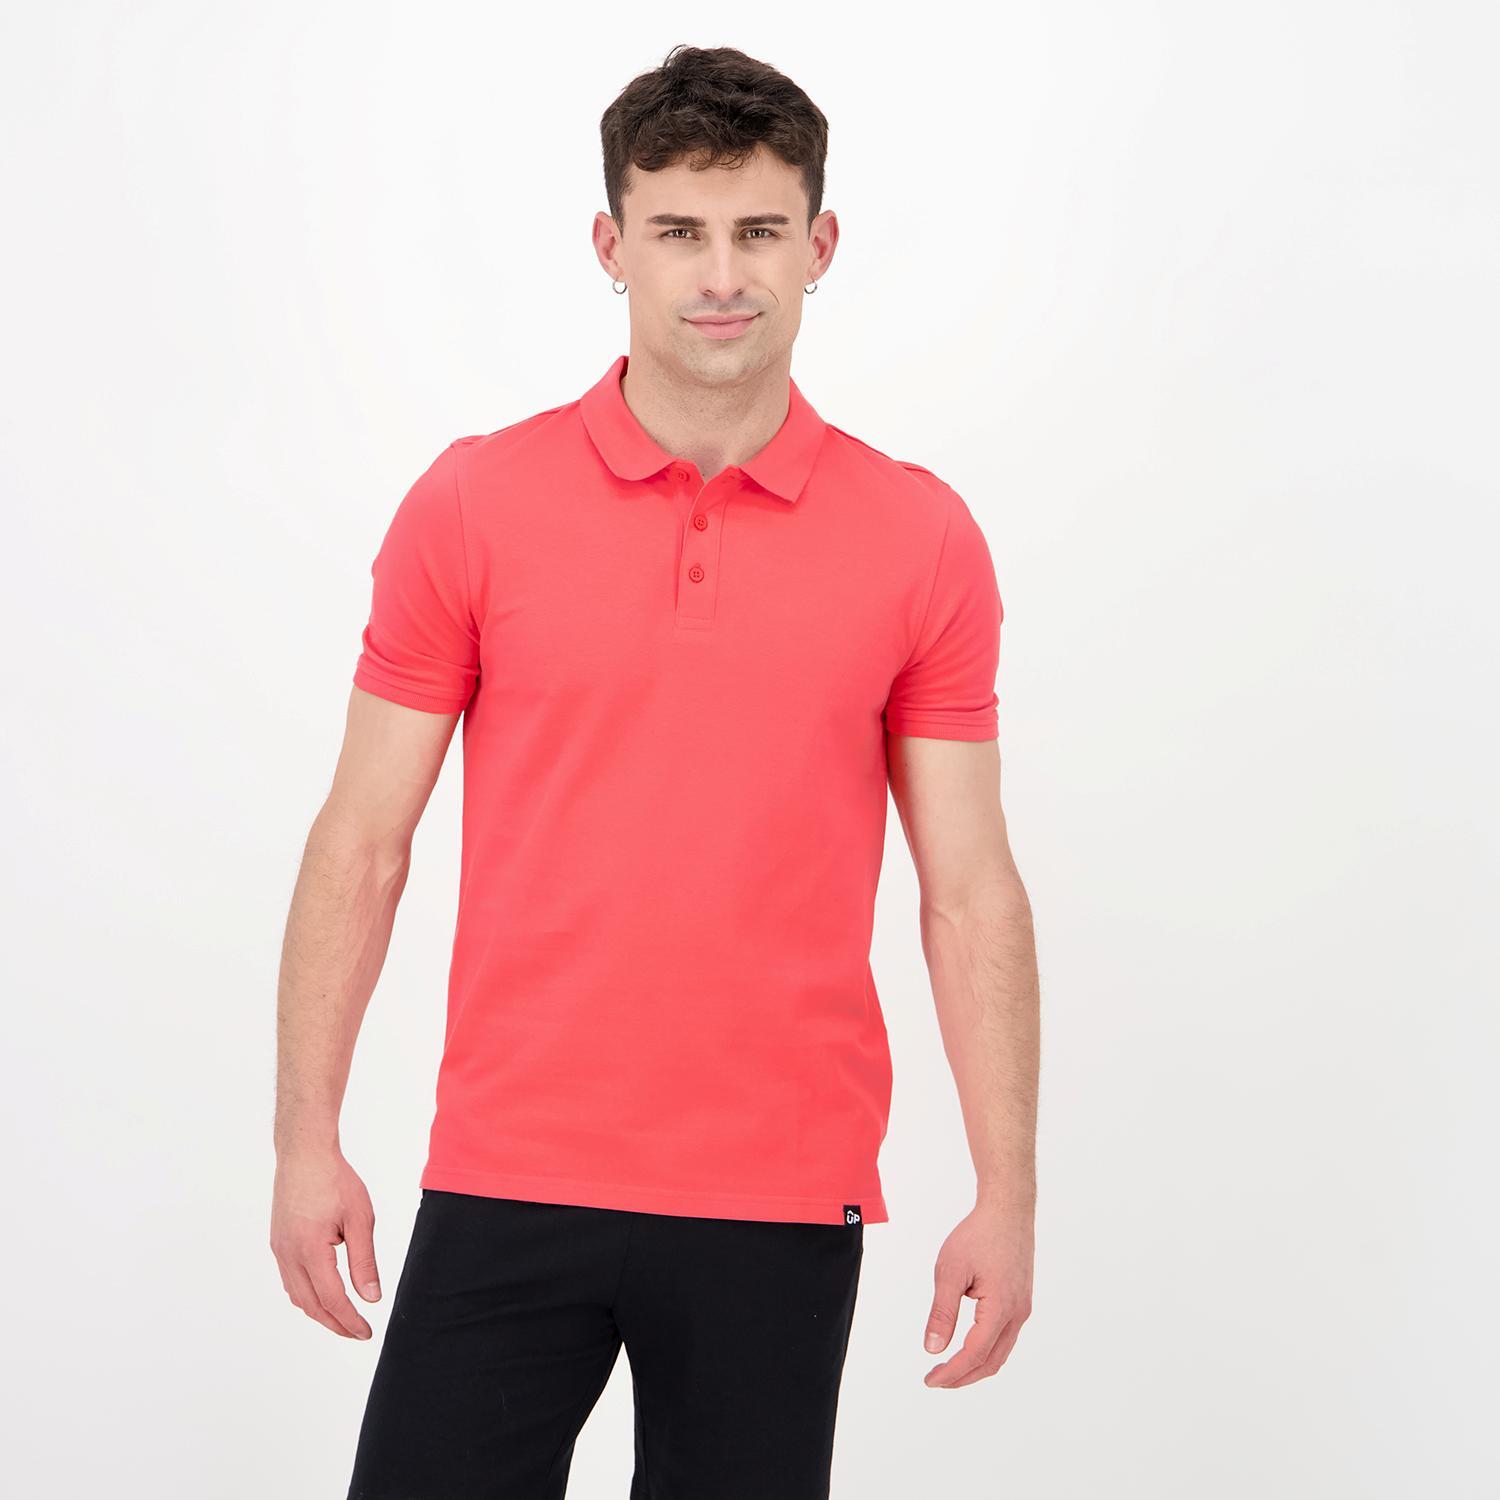 Up Basic - Rojo - Camiseta Hombre